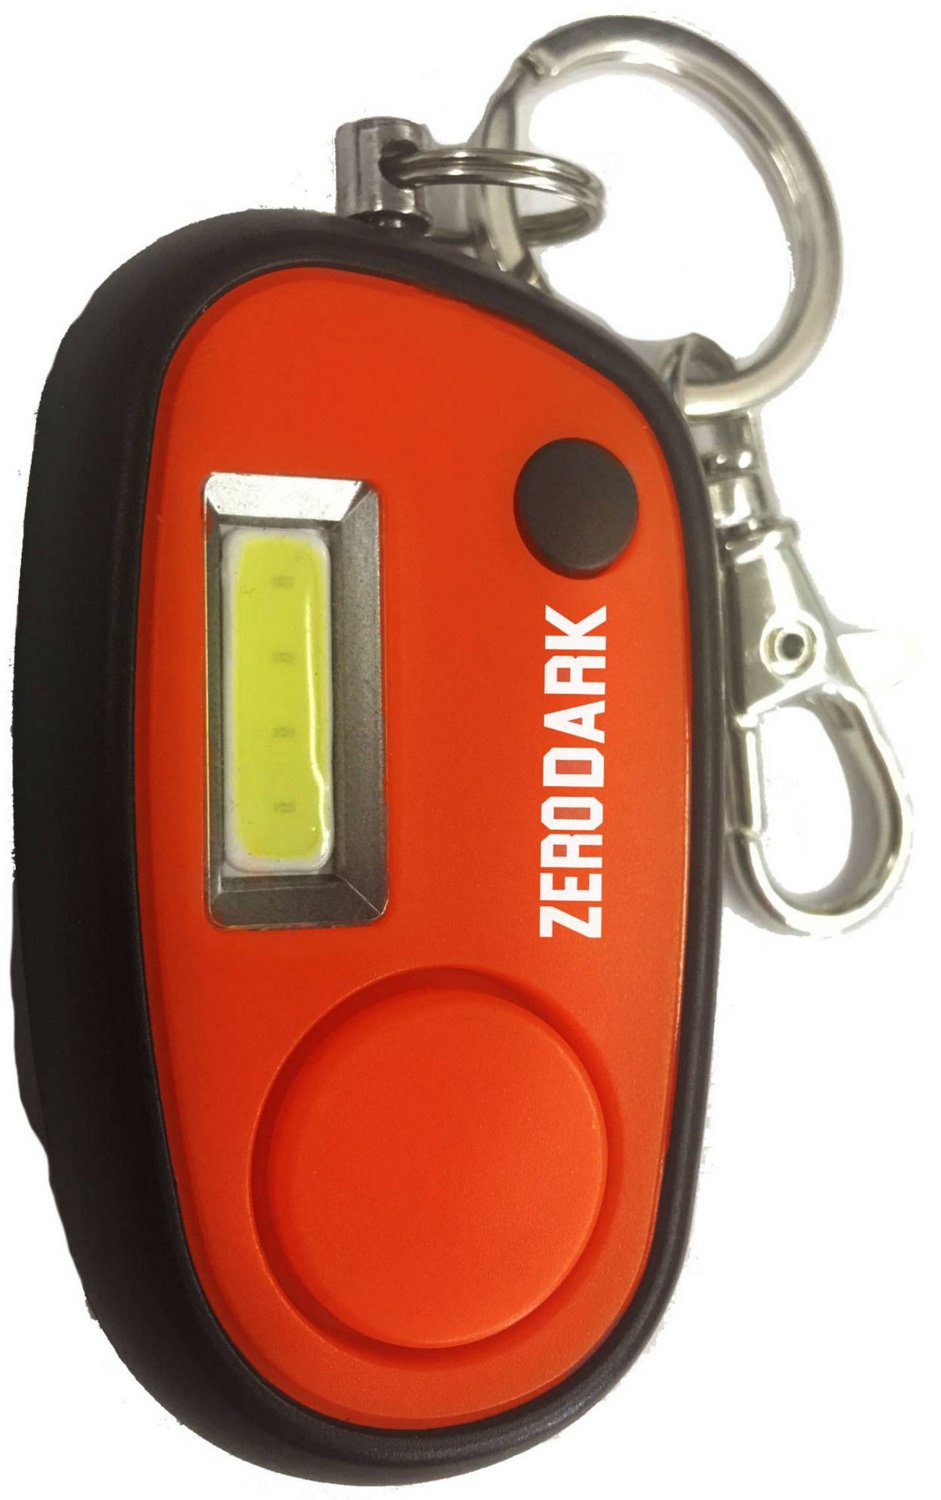 ZeroDark LED Lantern Flashlight Battery Operated Lantern Combo 2